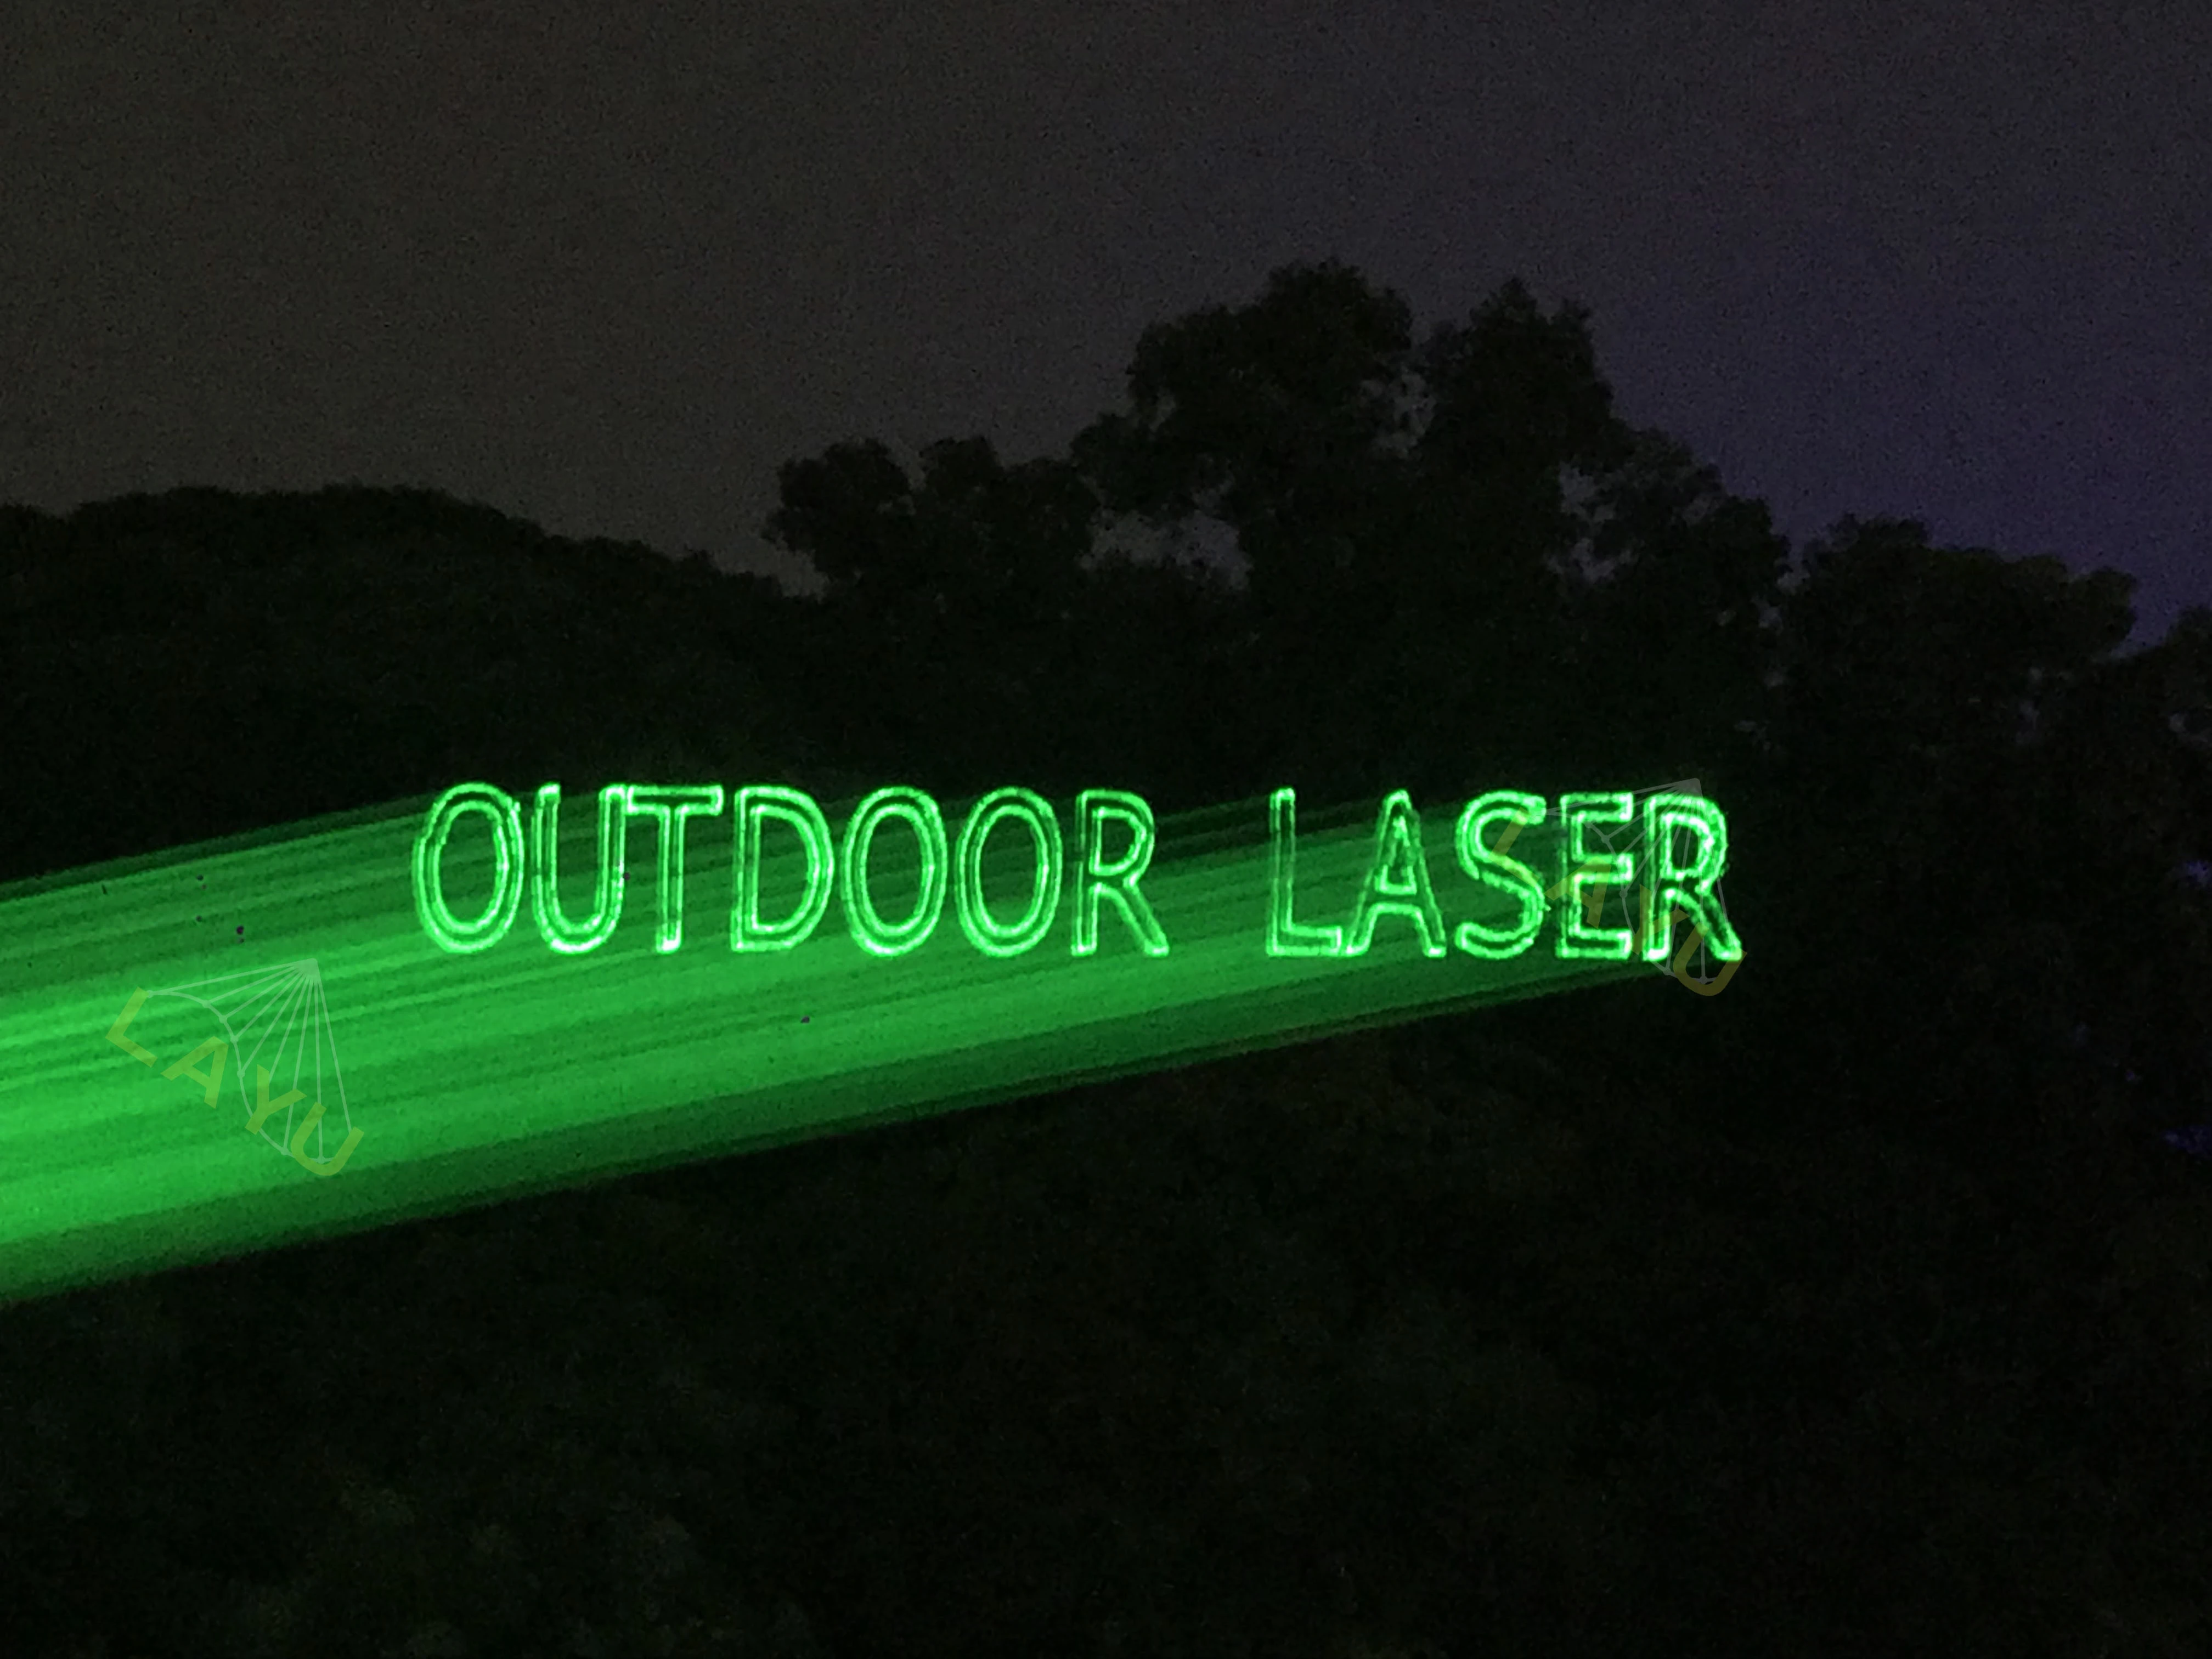 outdoor sky beam big laser light power 2 watt green light laser 5 watt combo laser diode 10w green